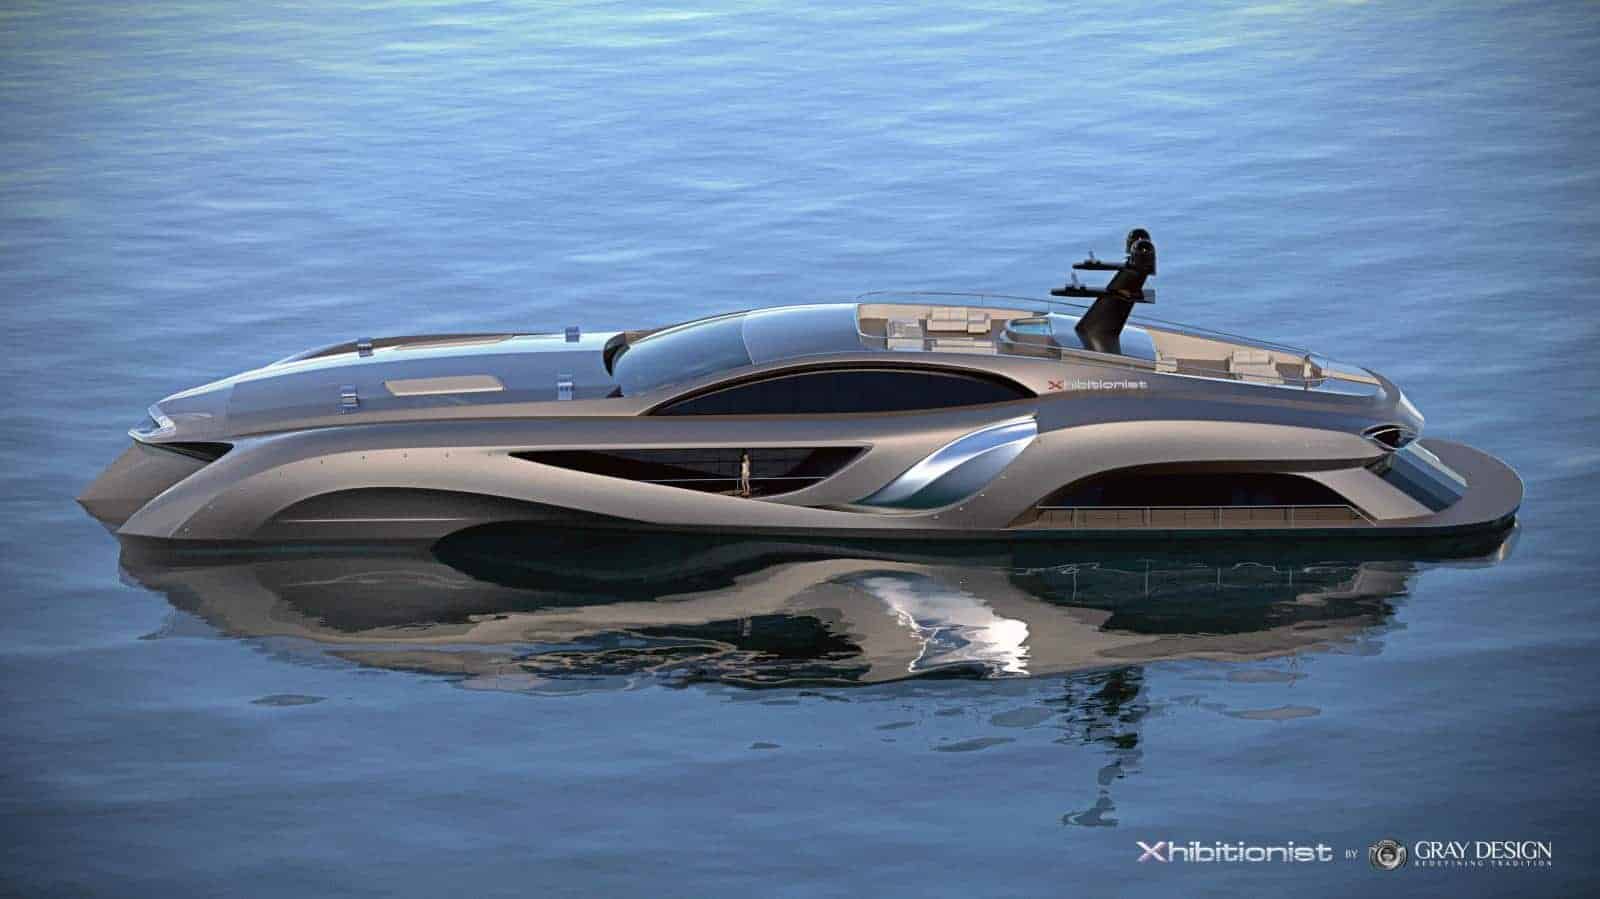 Gray Design’s Xhibitionist yacht and Xhibit G car 1